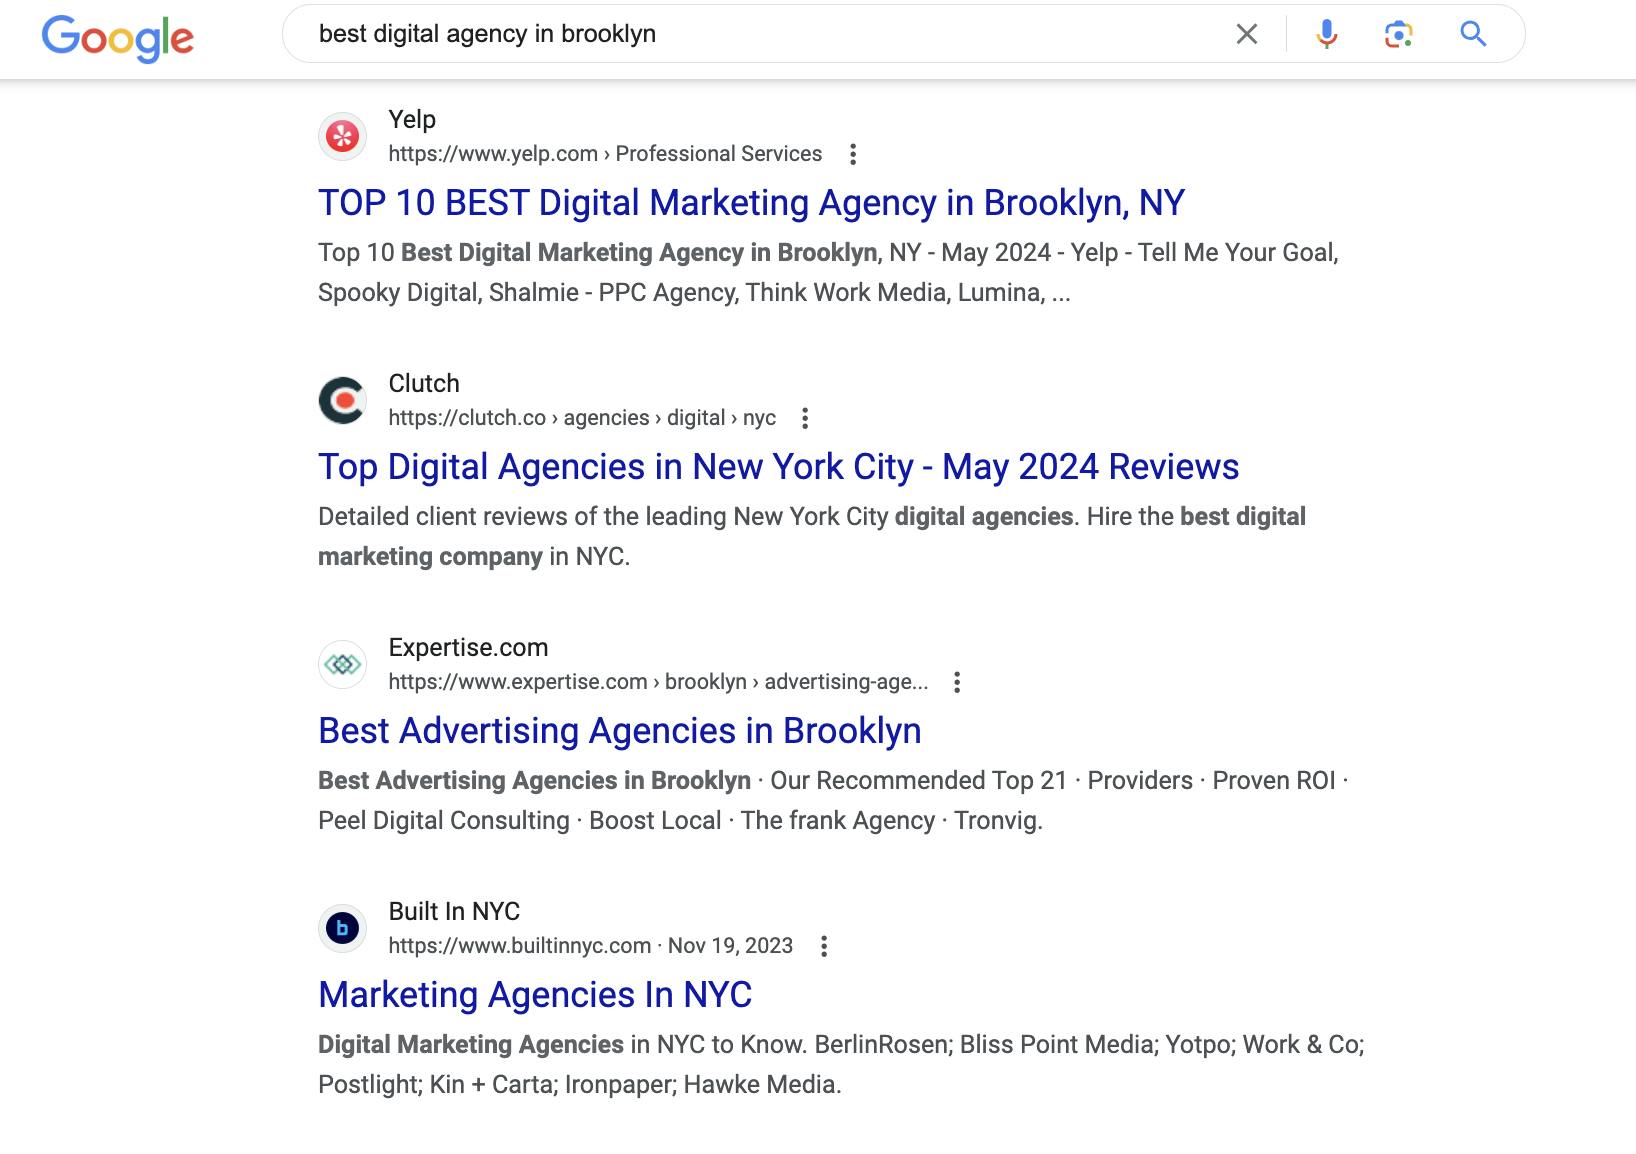 Google search results for "best digital marketing agency in Brooklyn"